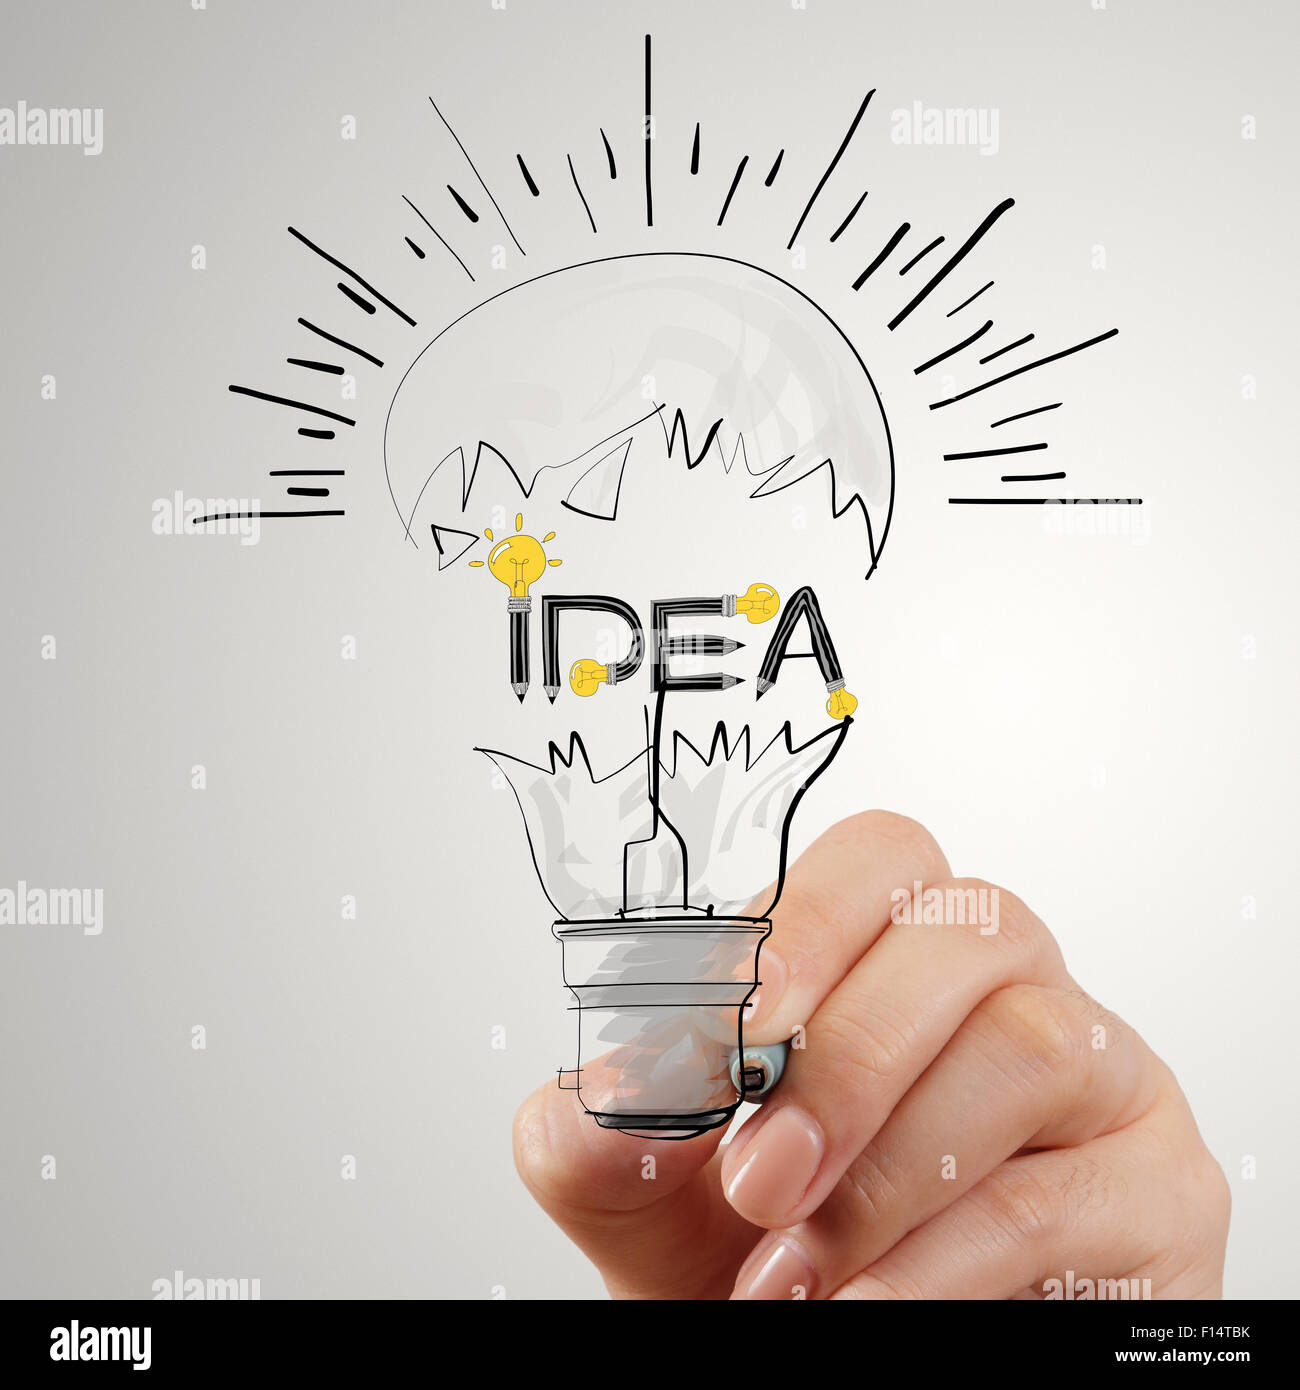 https://c8.alamy.com/comp/F14TBK/hand-drawing-light-bulb-and-idea-word-design-as-concept-F14TBK.jpg